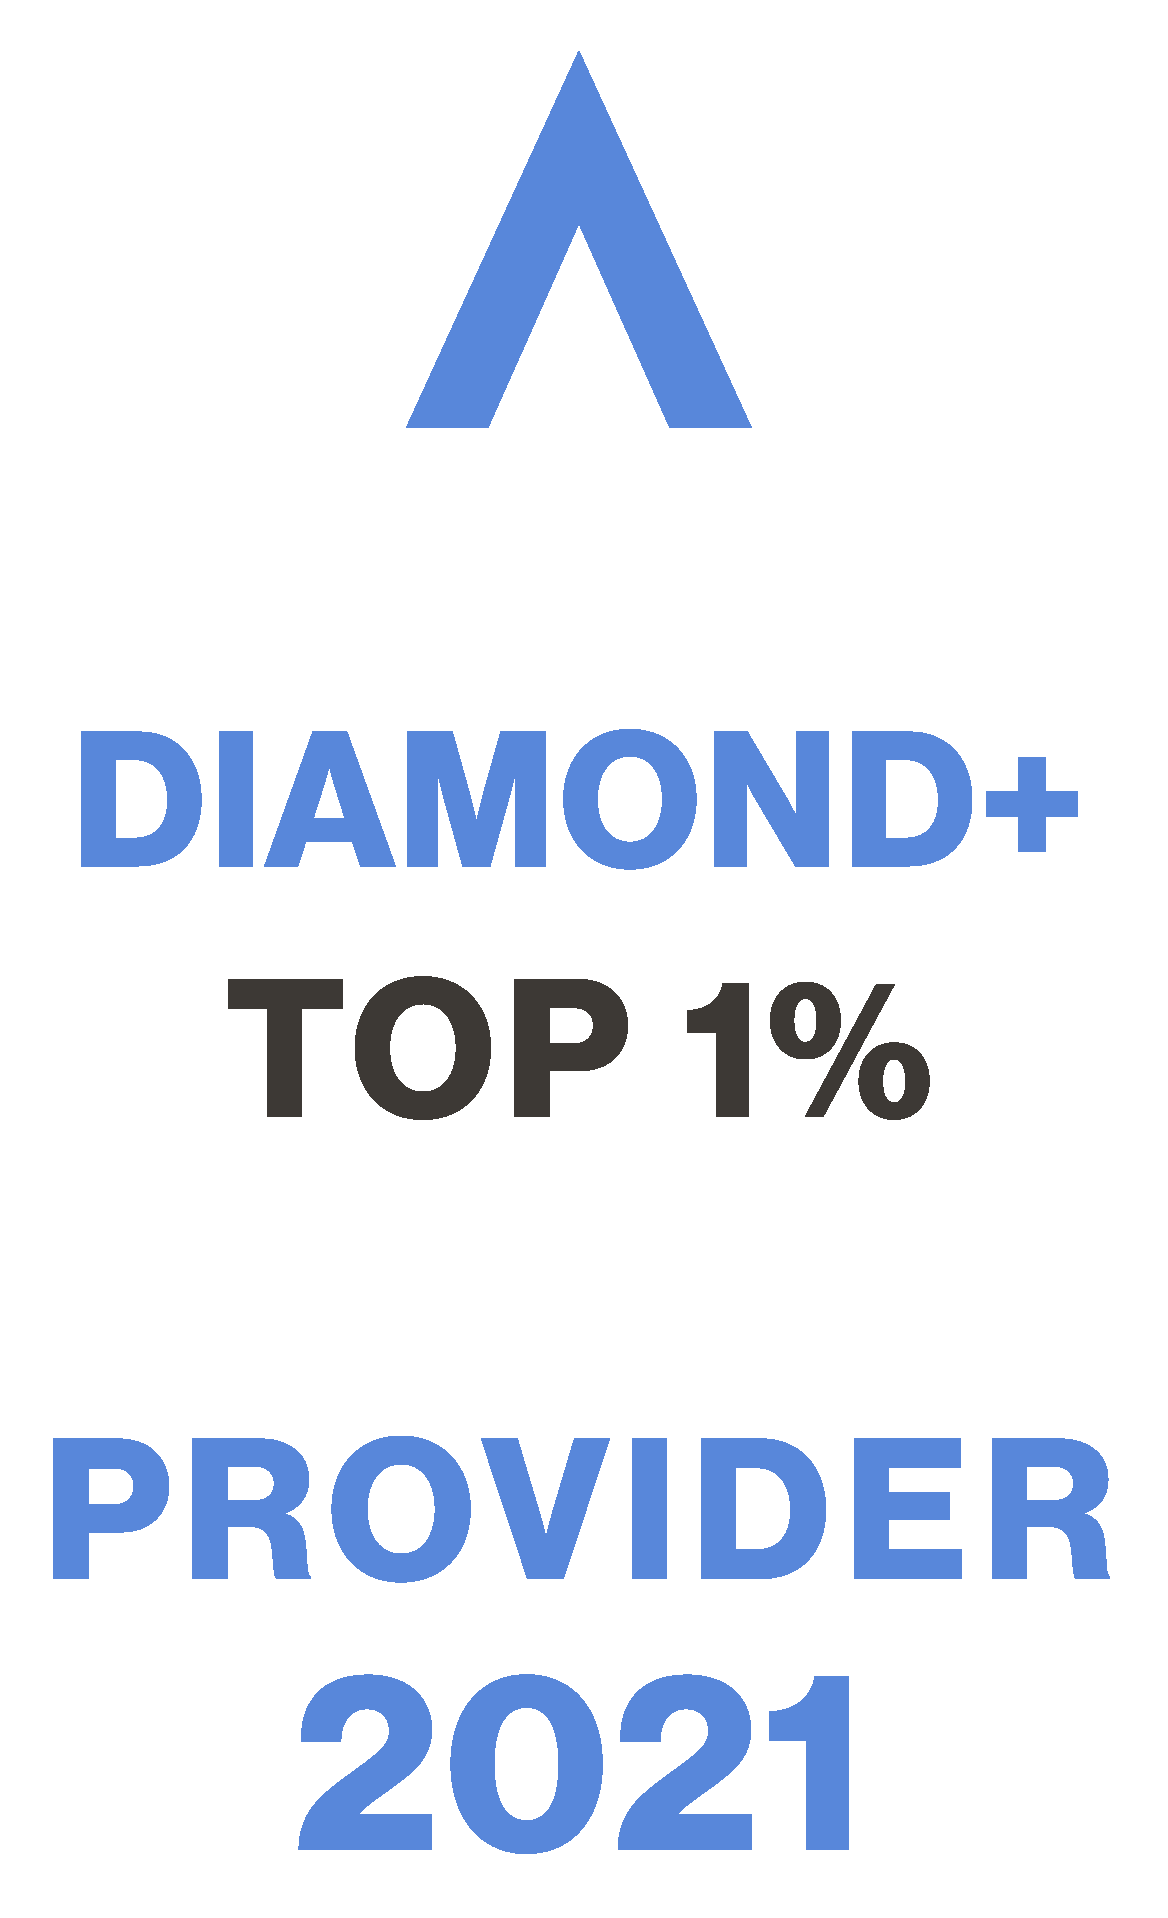 Invisalign Diamond Top Provider Logo